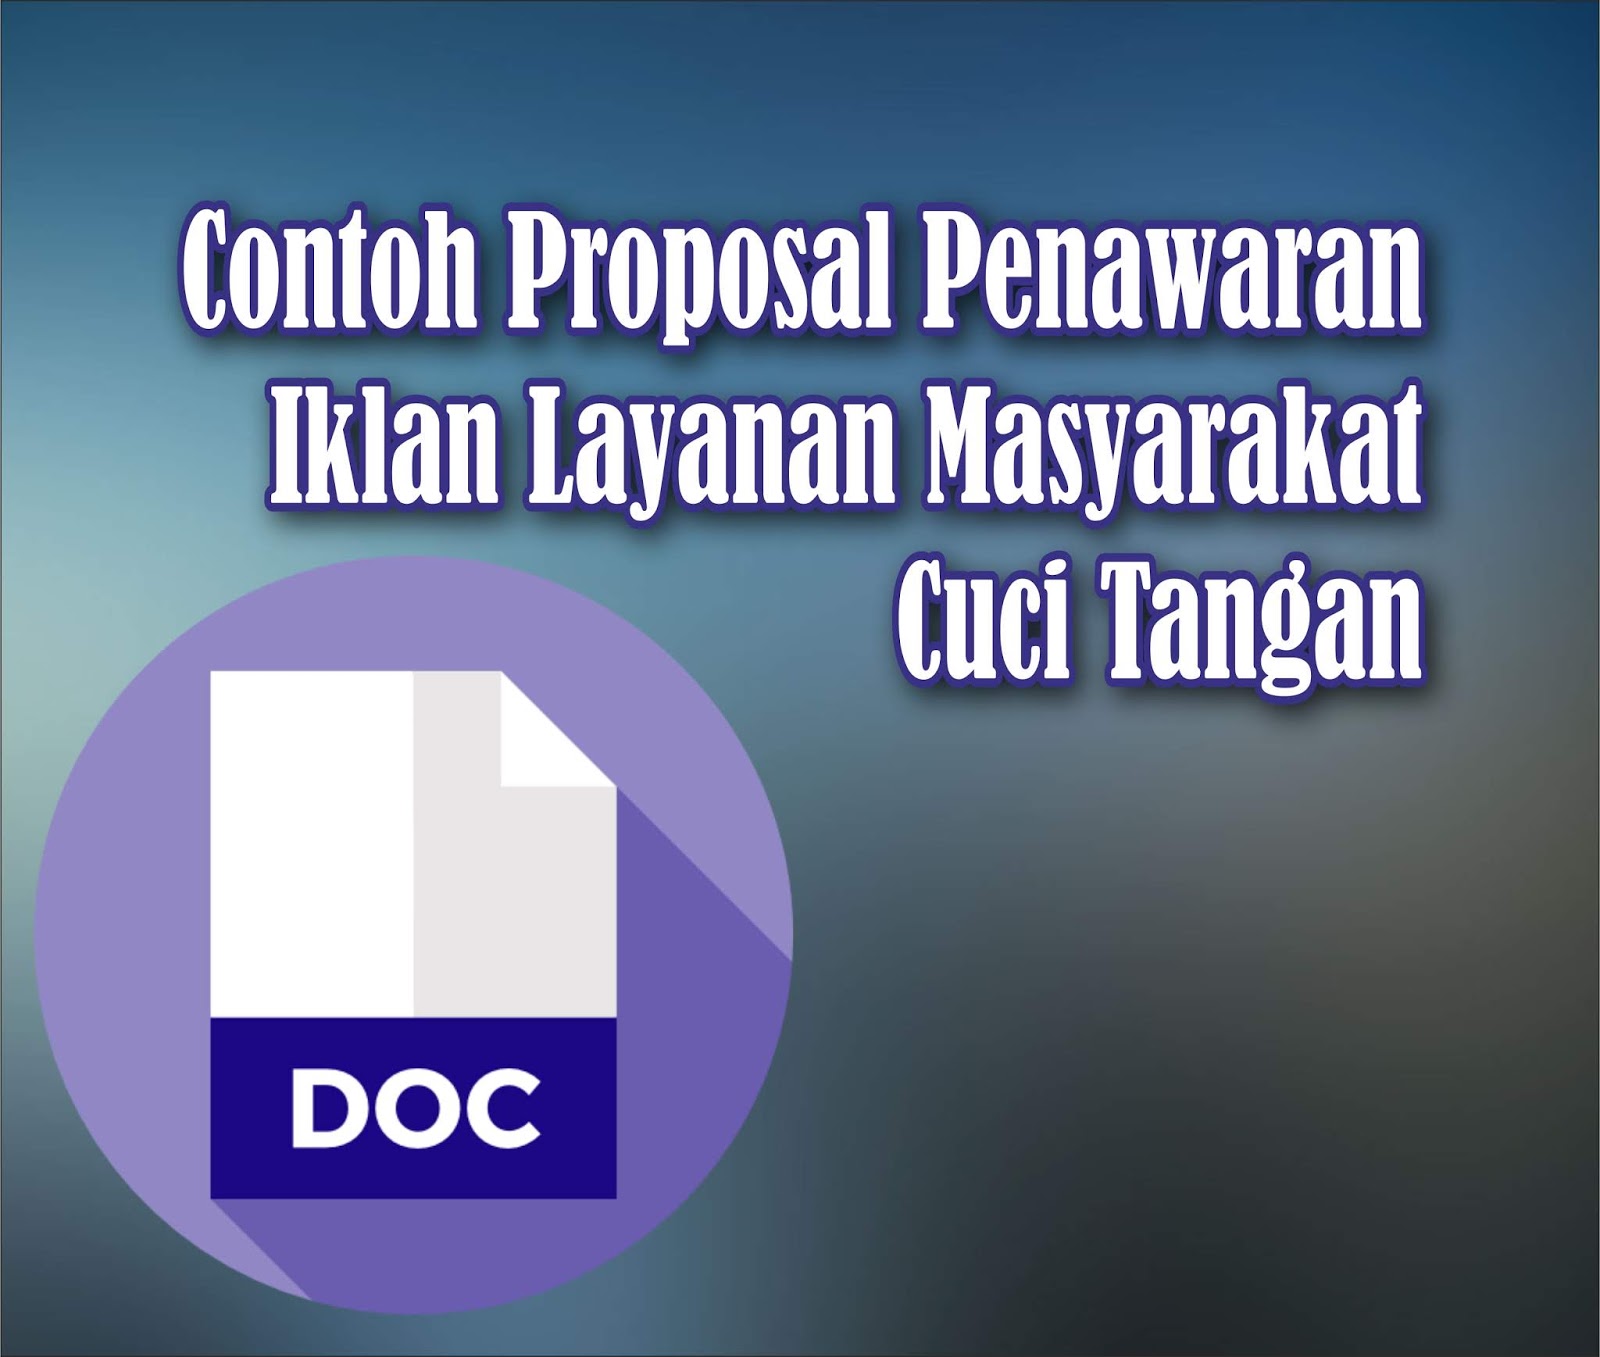 Proposal Penawaran Iklan Layanan Masyarakat Cuci Tangan Ayfame Productions Official